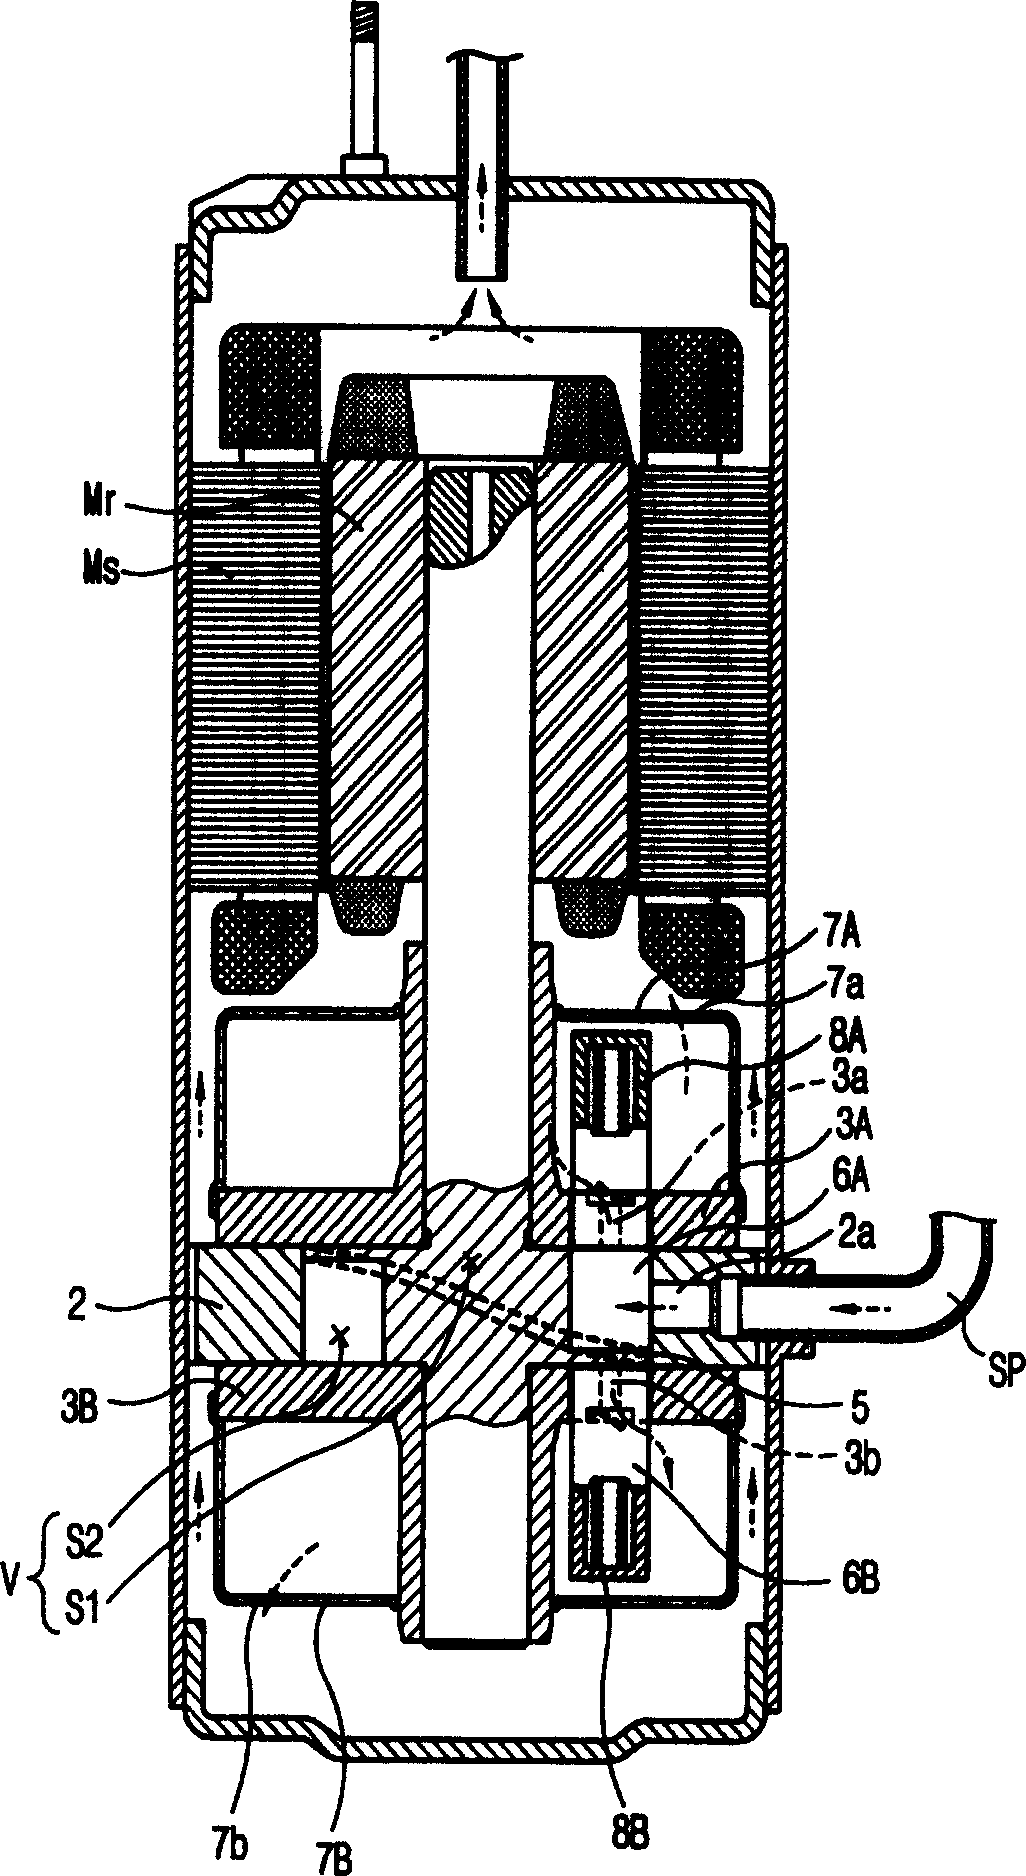 Separate partiton structure of closed compressor